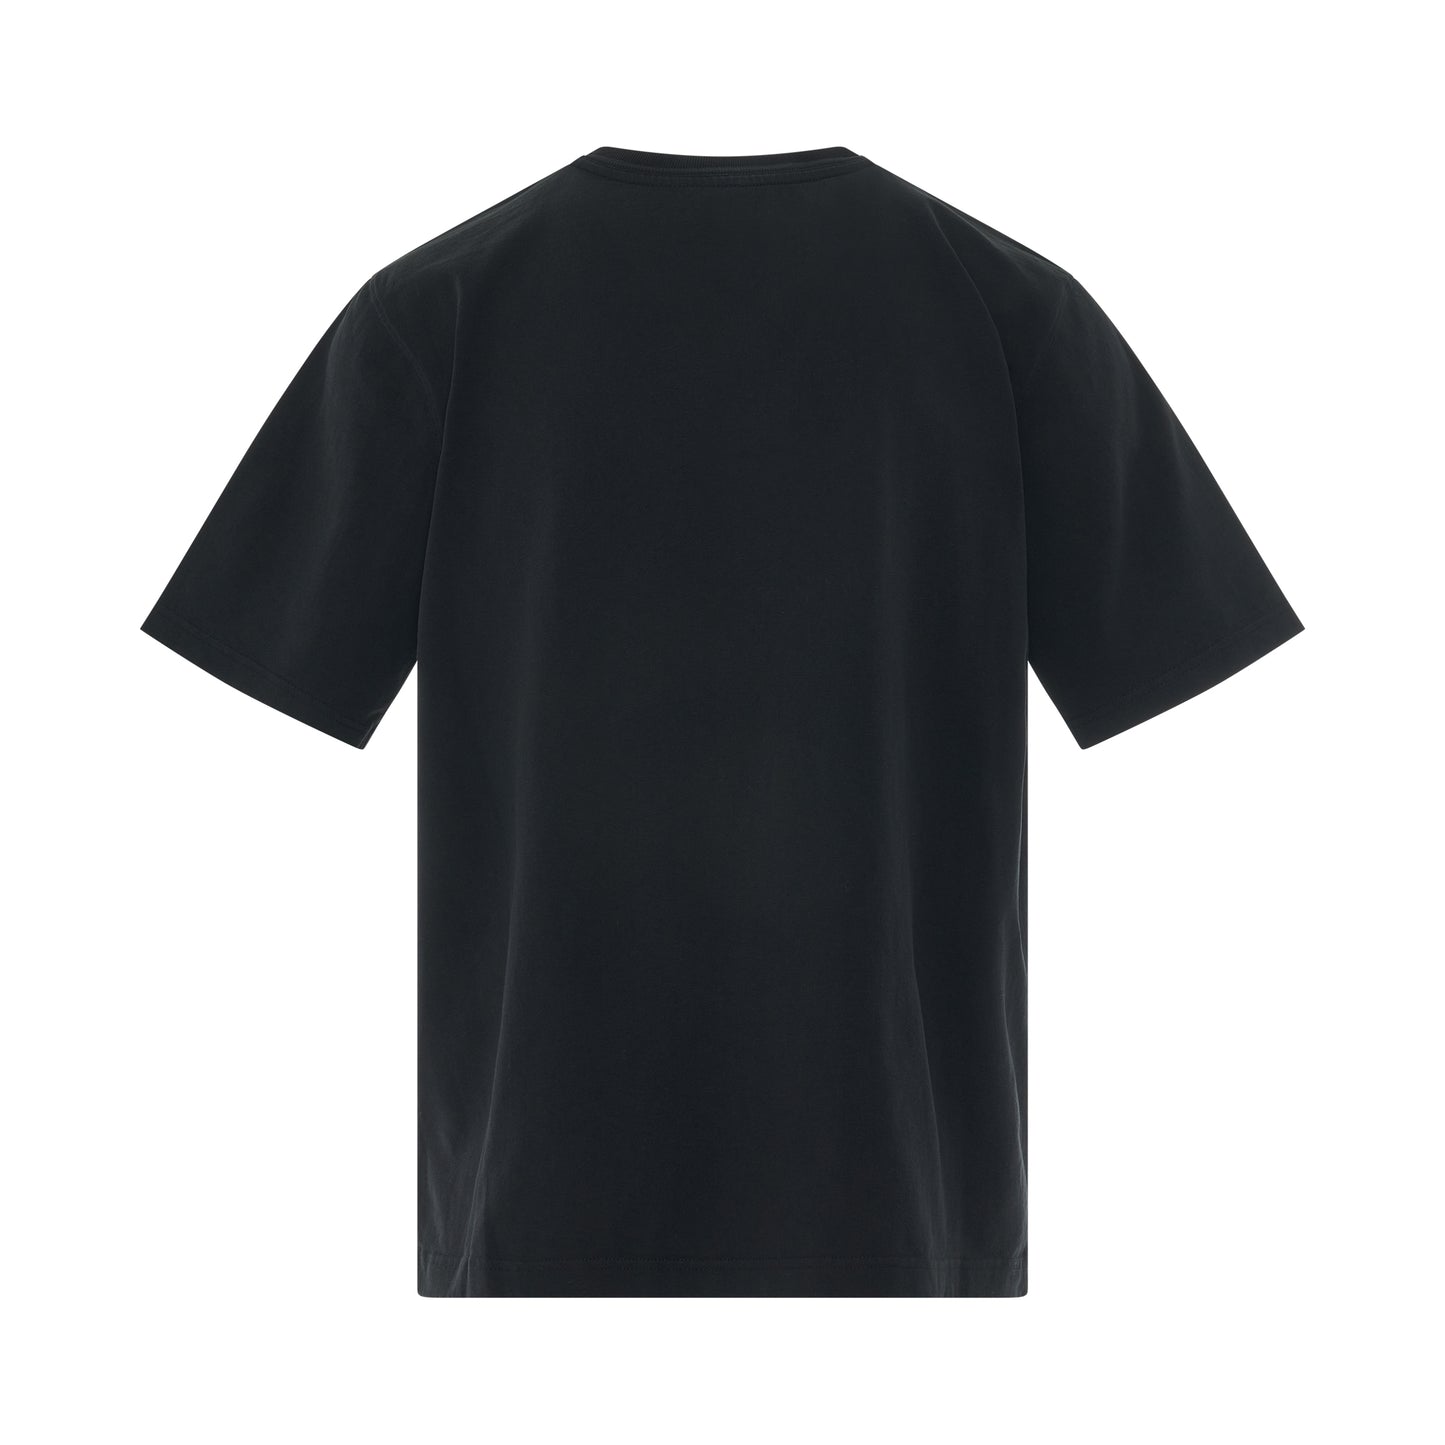 CTNMB Strass T-Shirt in Black